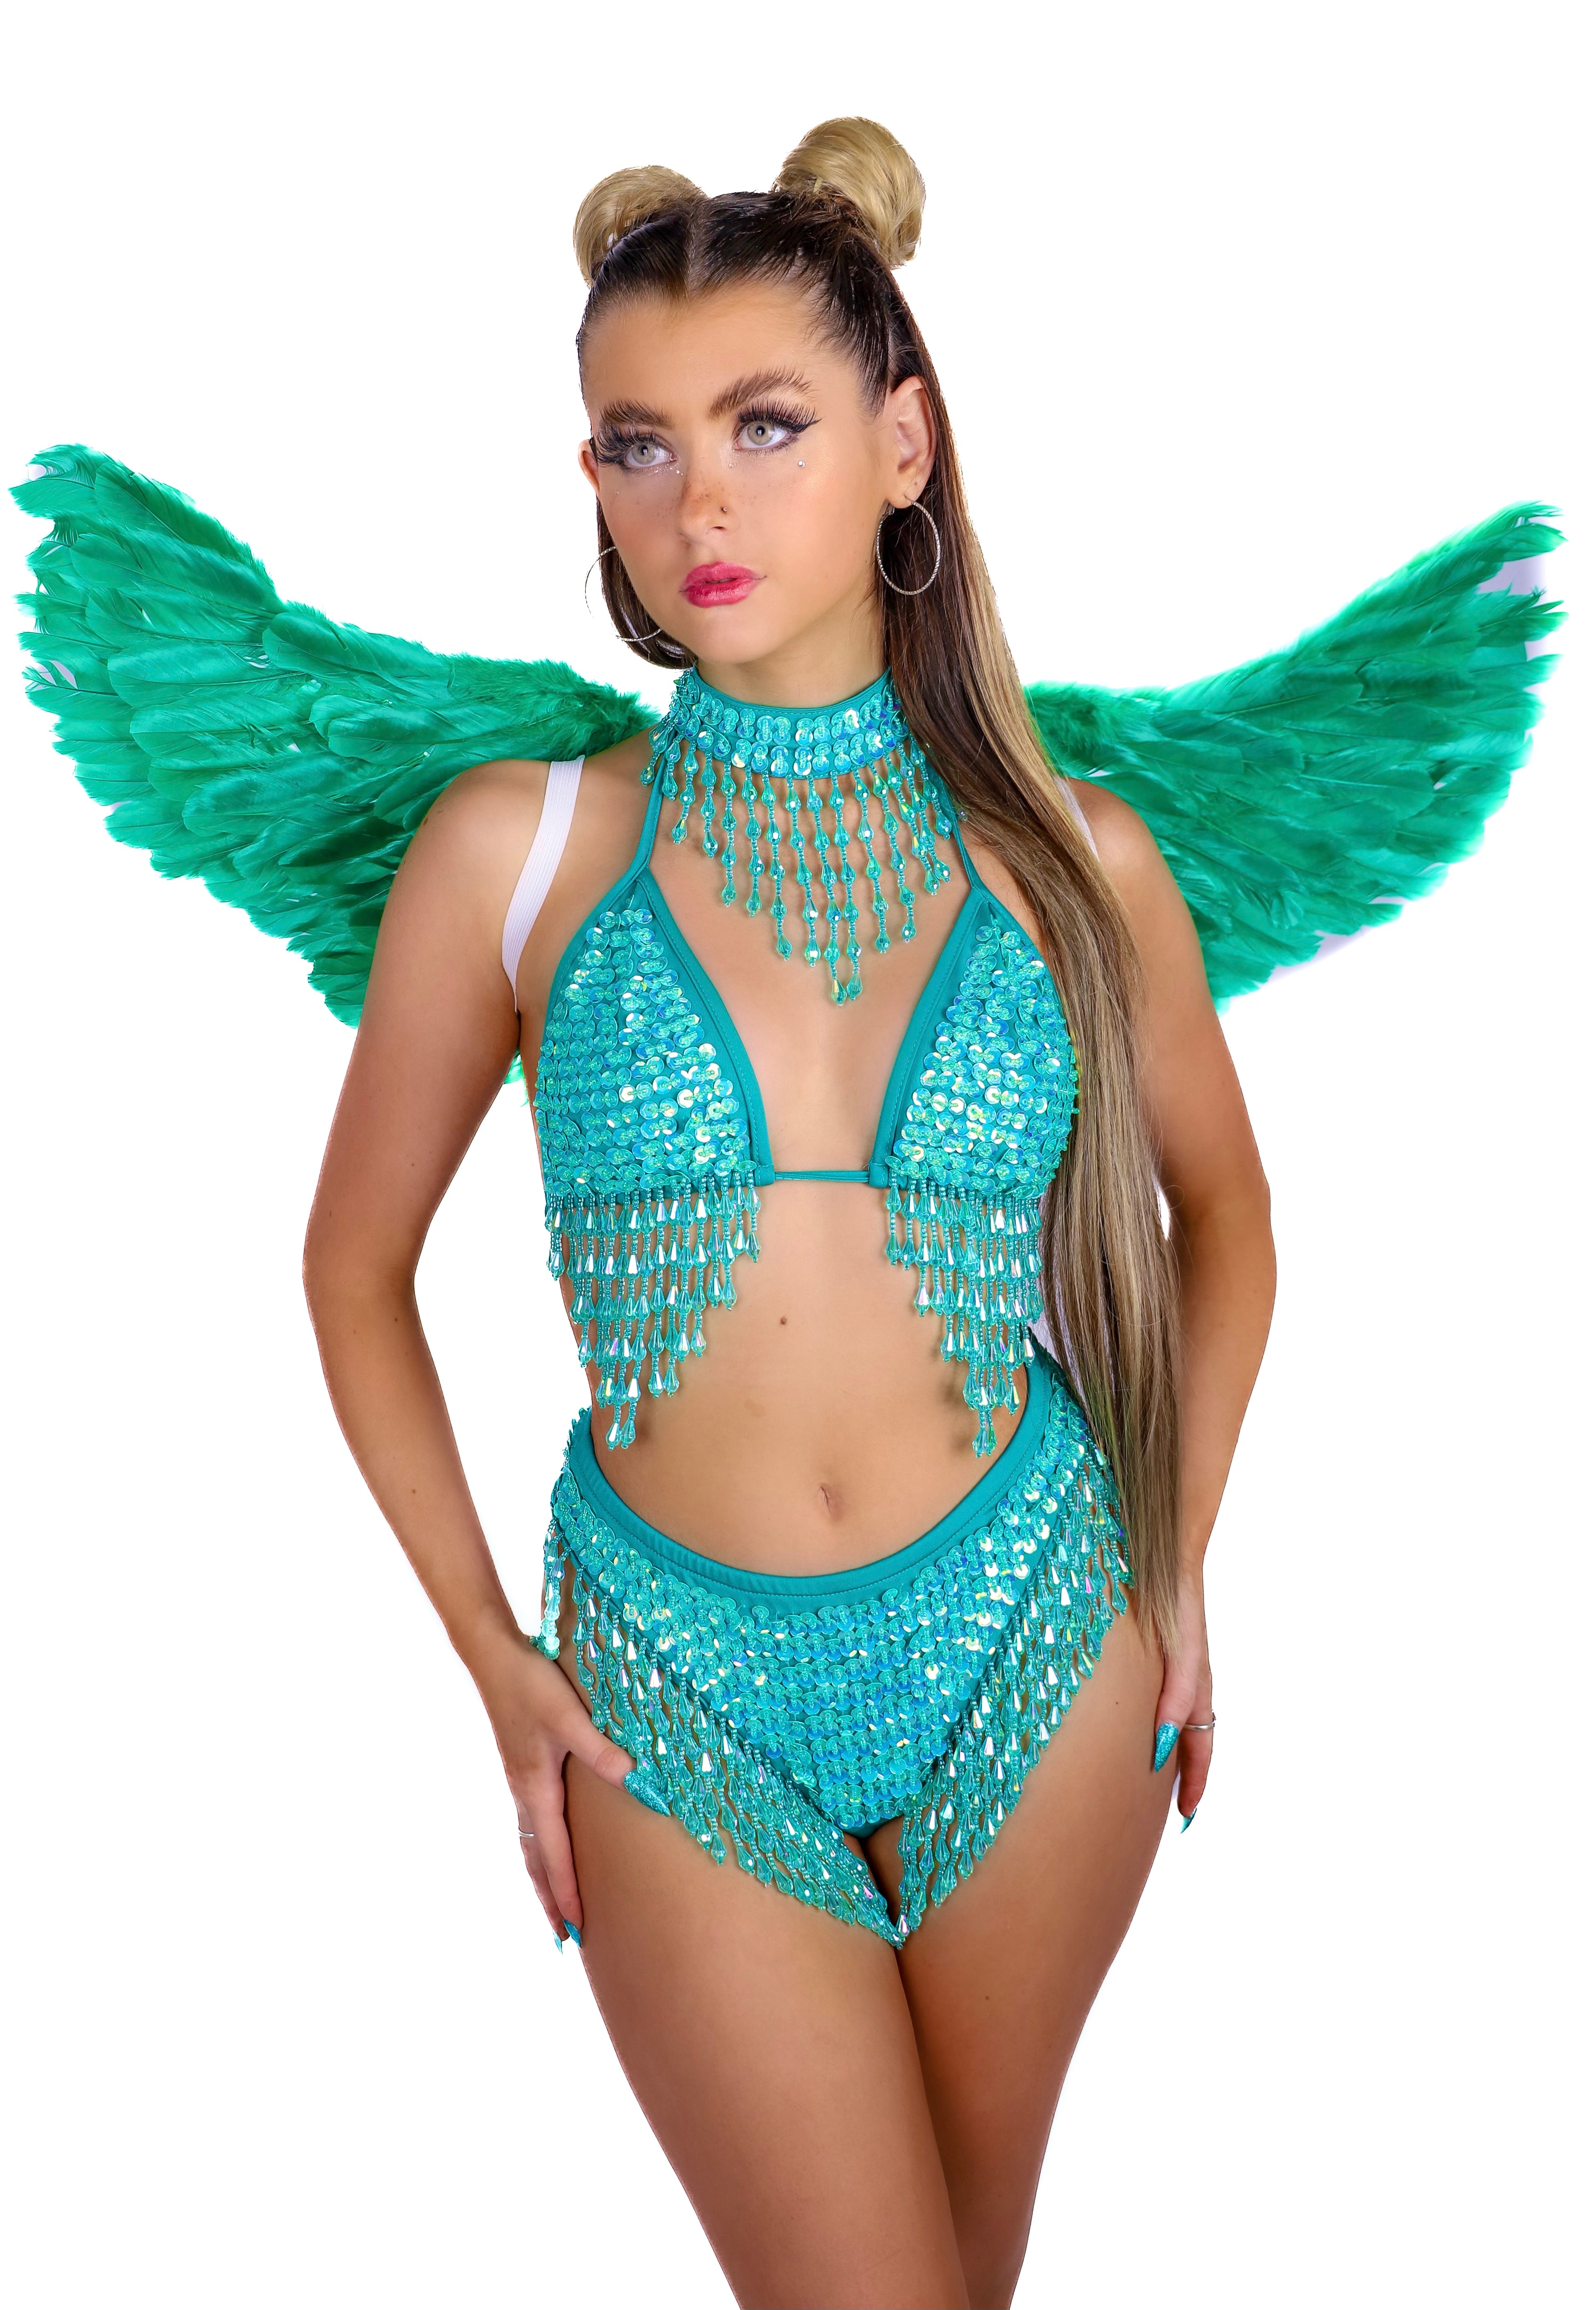 Green Angel Wings